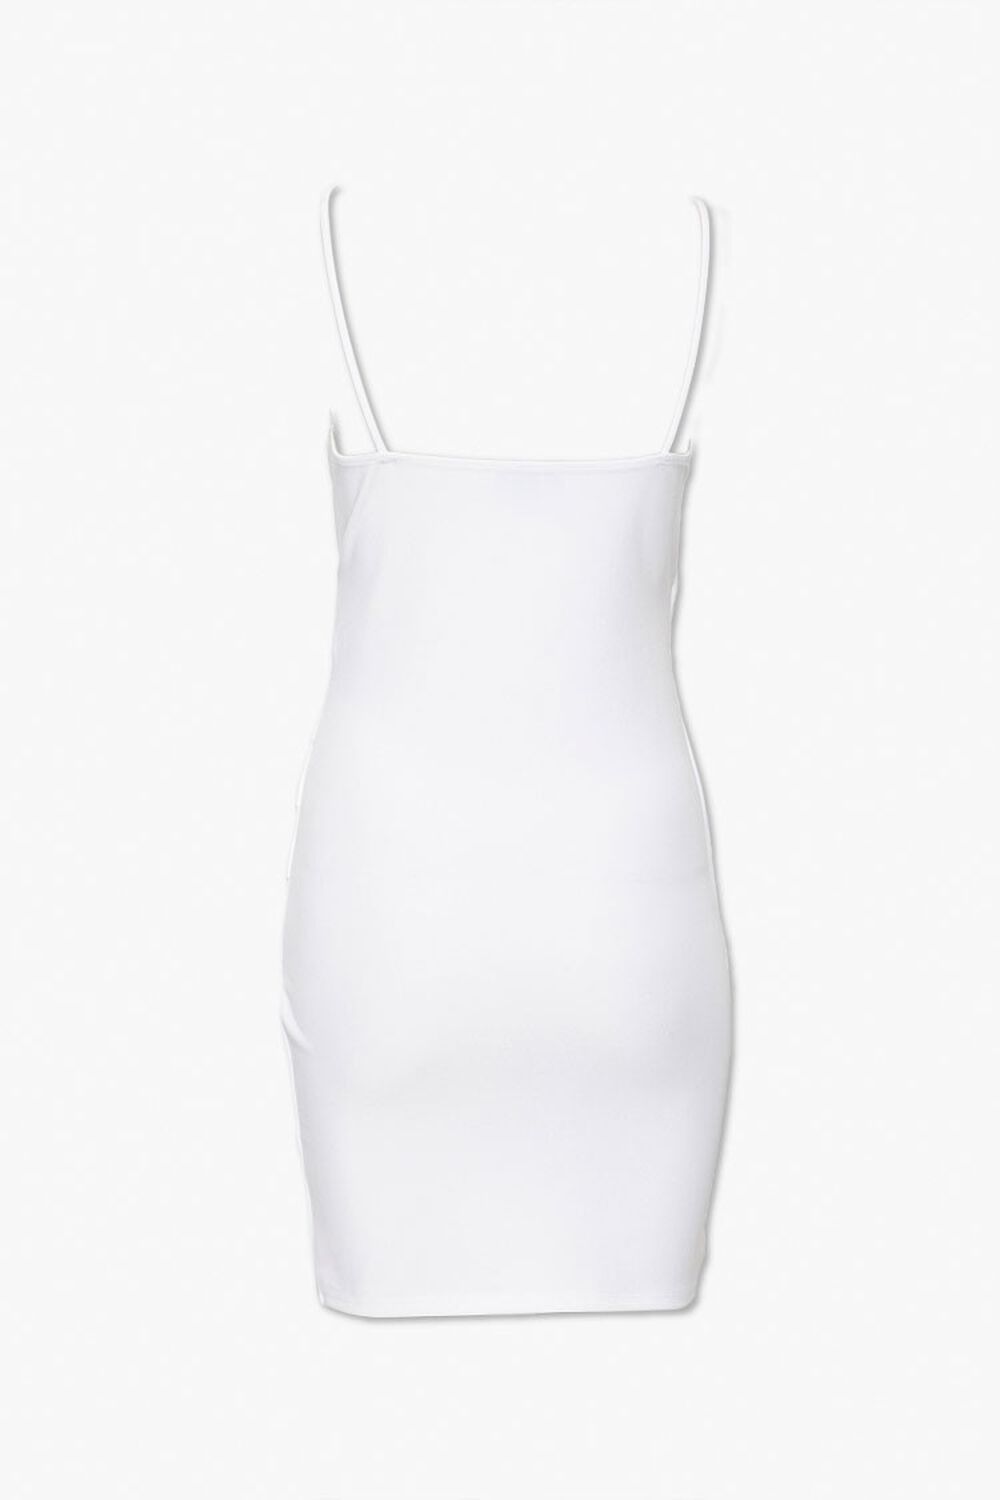 CREAM Tulip-Hem Mini Dress, image 3